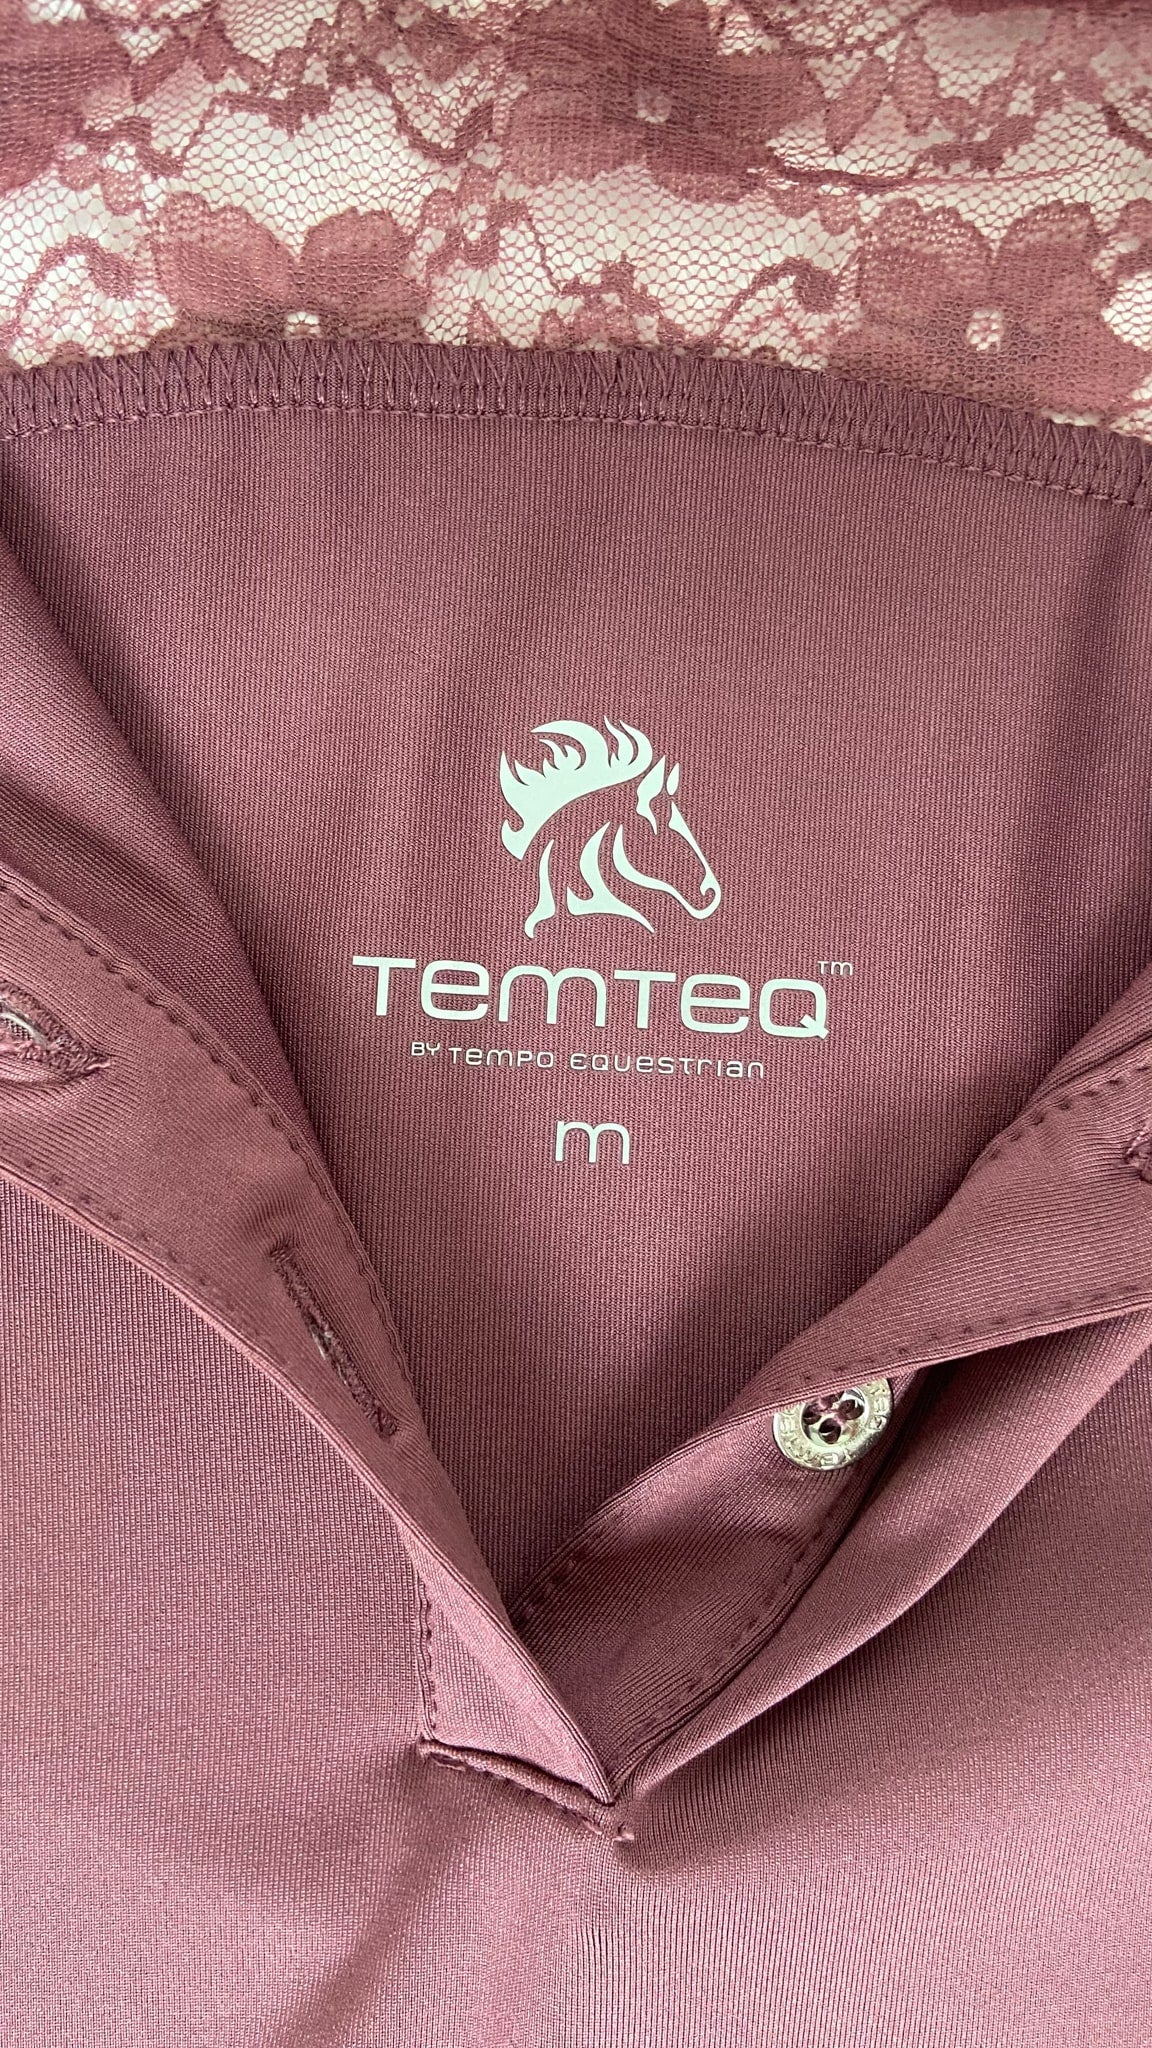 Tempo Equestrian Coco Functional Lace Trim Shirt - Nighshadow - Women's Medium